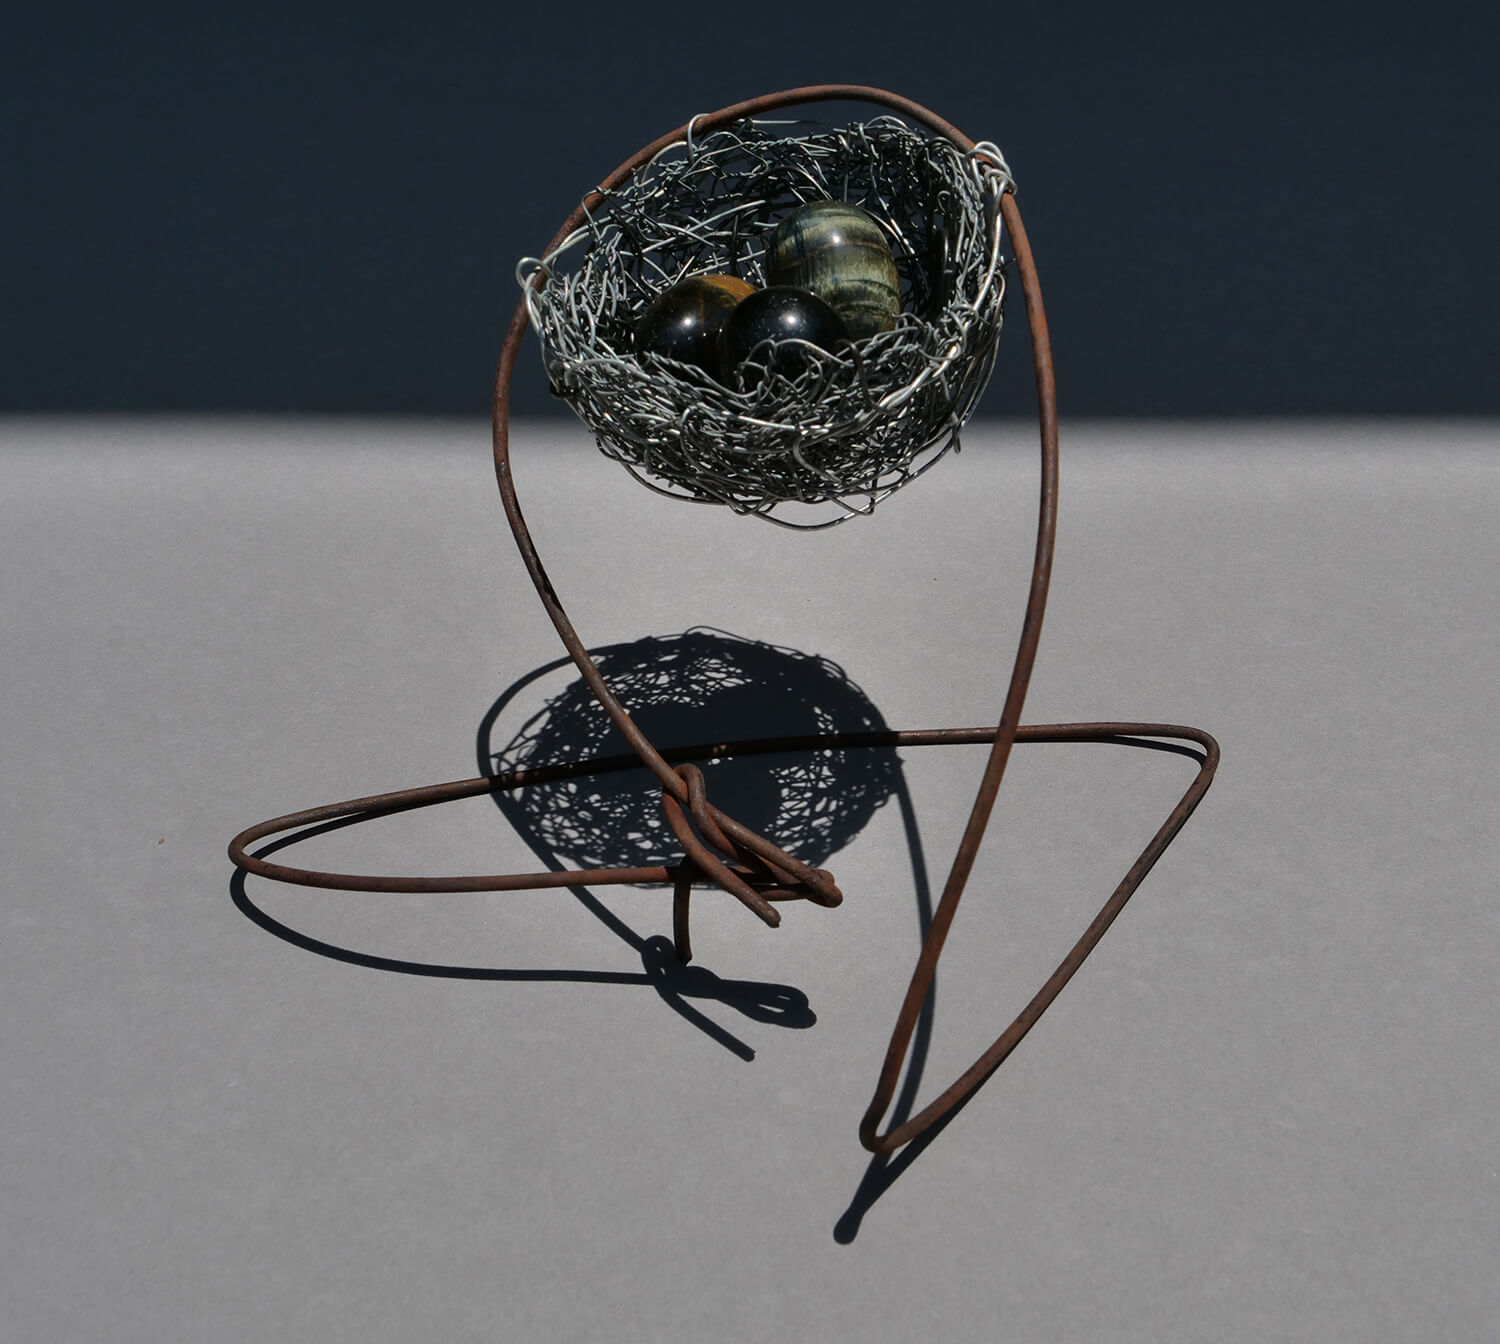 Nest 3. Handmade wire nest by Lucy McCann